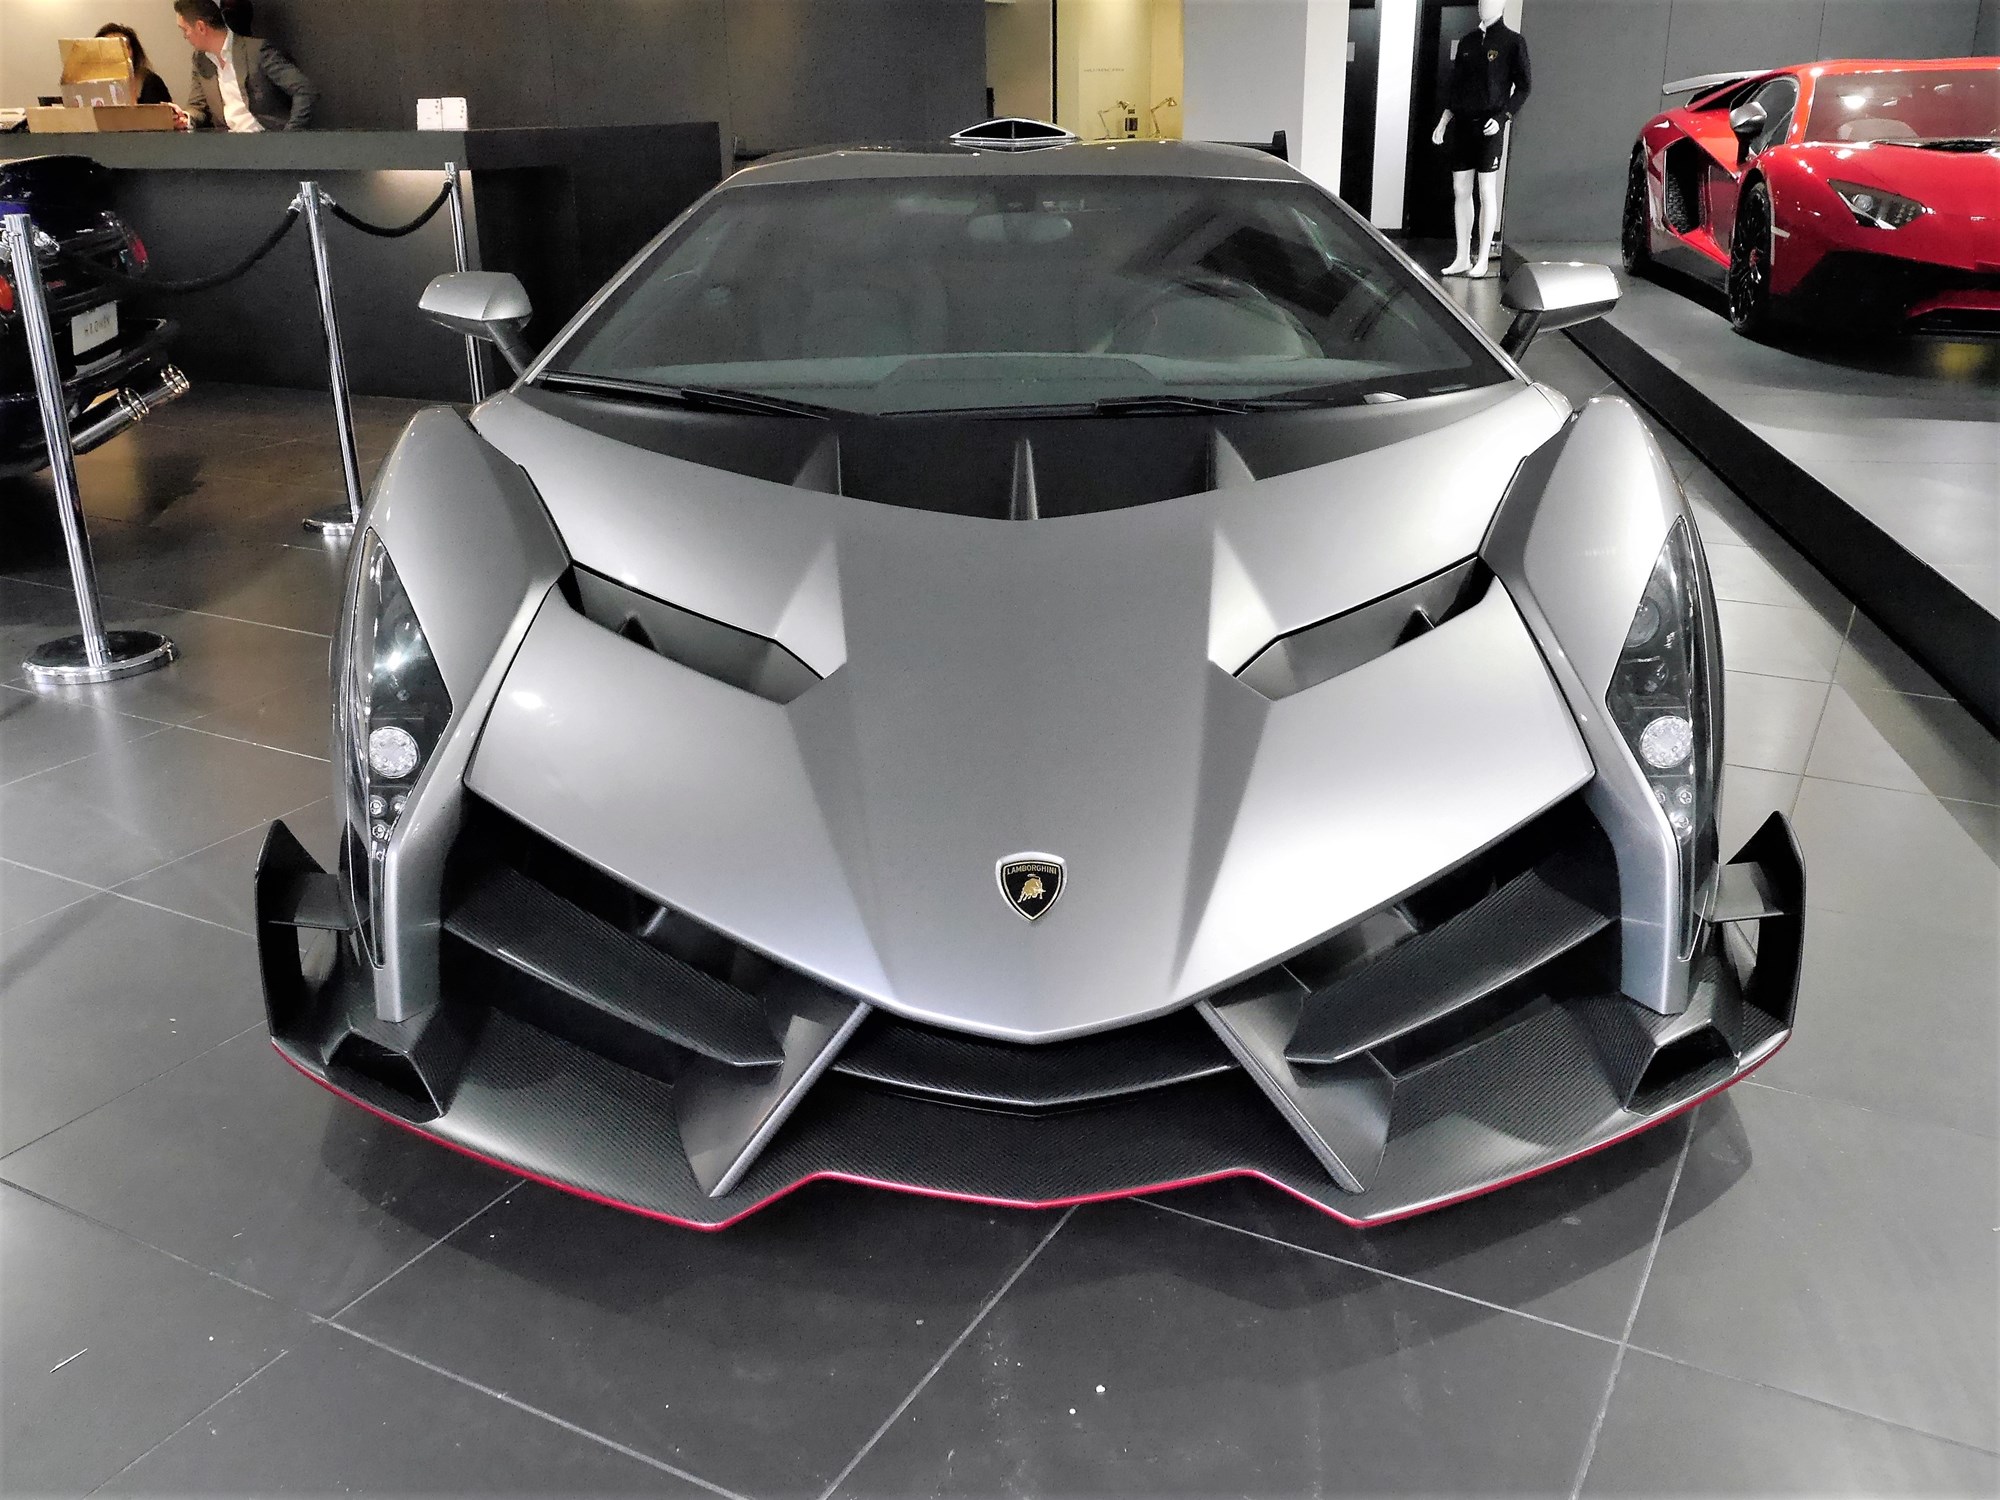 Ultra-rare Lamborghini Veneno to make UK showroom debut at HR Owen  Lamborghini London | Car Dealer News